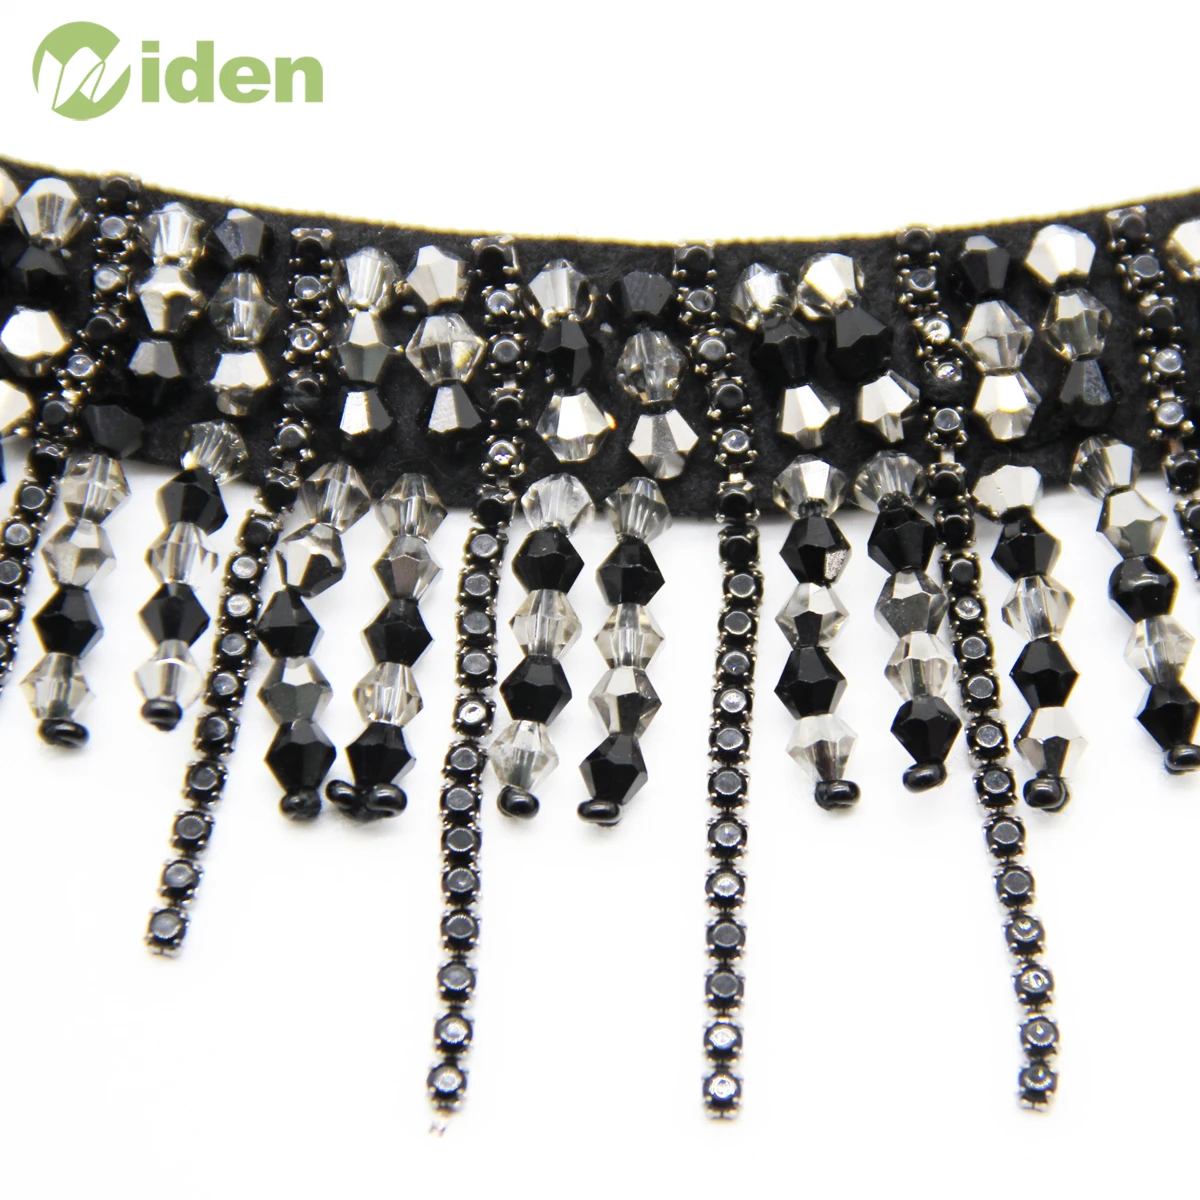 Tassels Beads Border Elegance Neckline Beaded Lace Trimming Applique Trim For Wedding Dresses